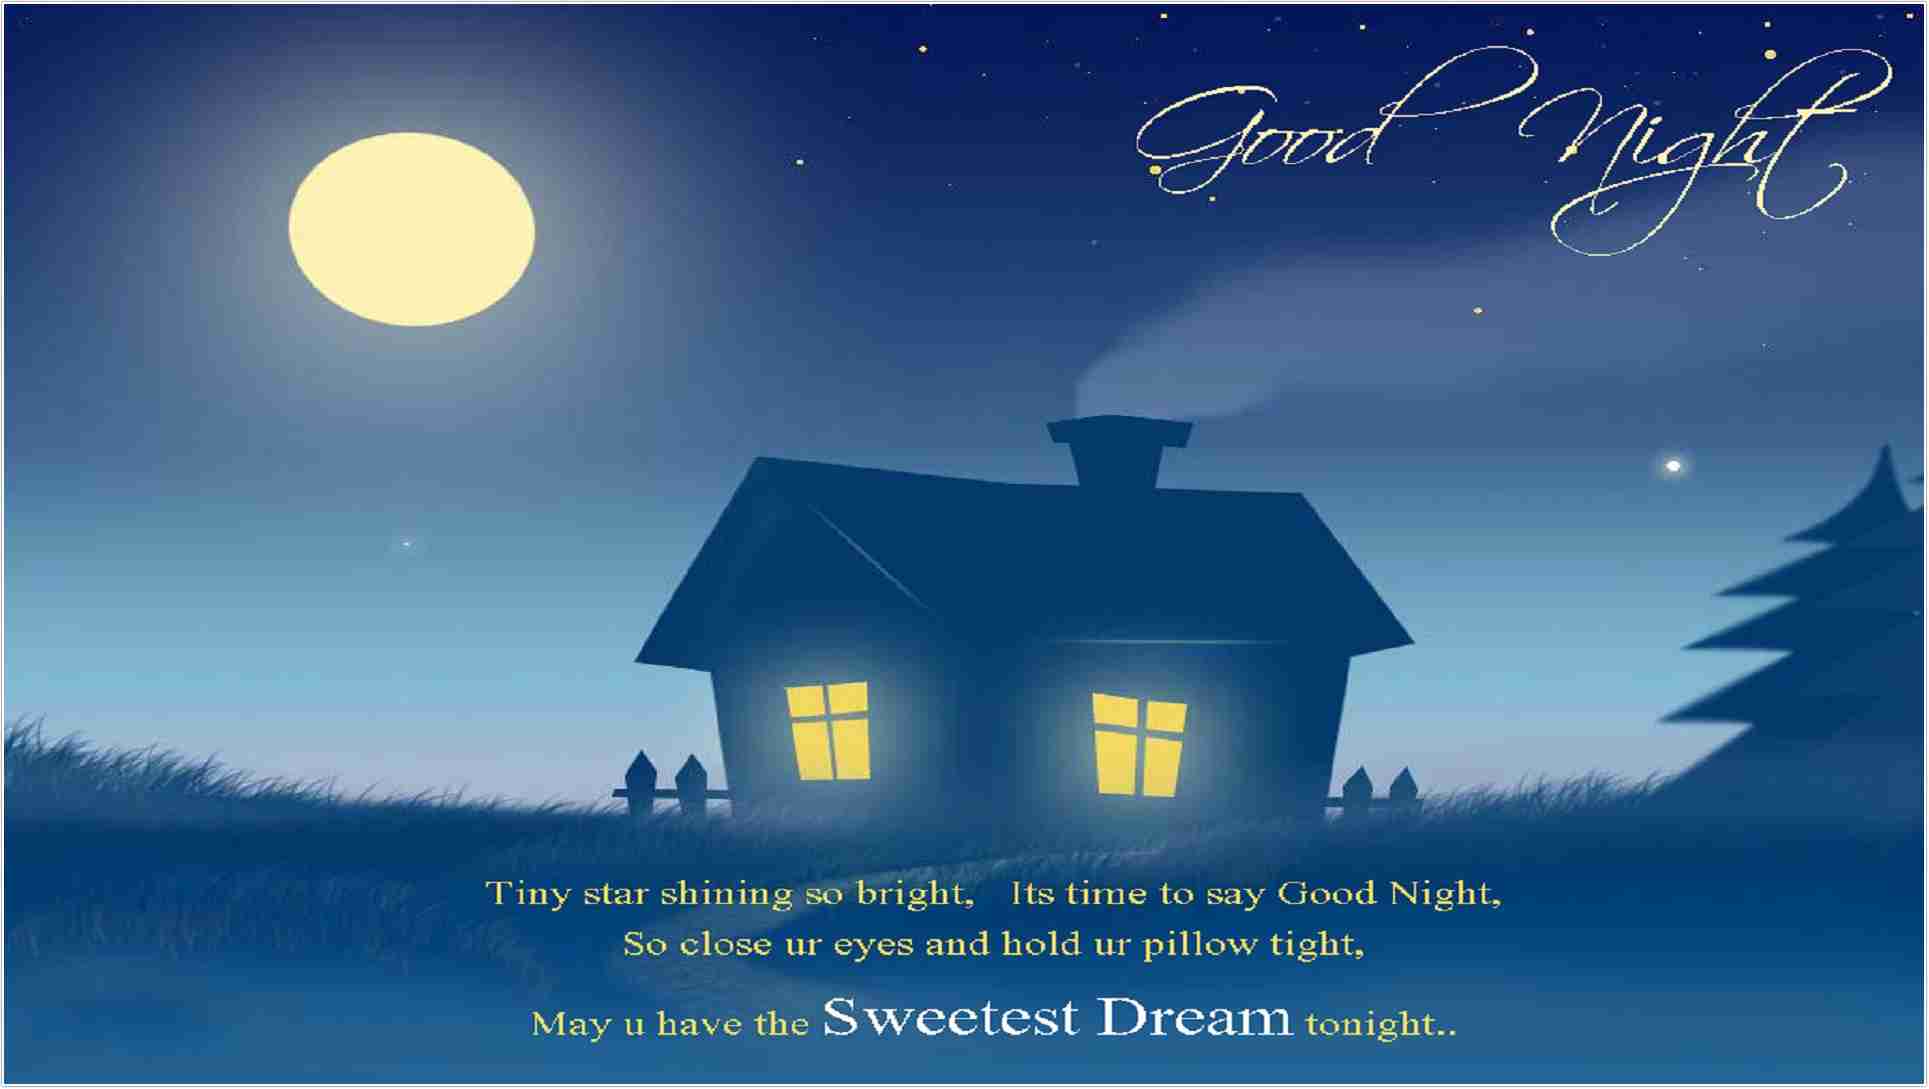 good night wallpaper hd,sky,light,text,moonlight,house